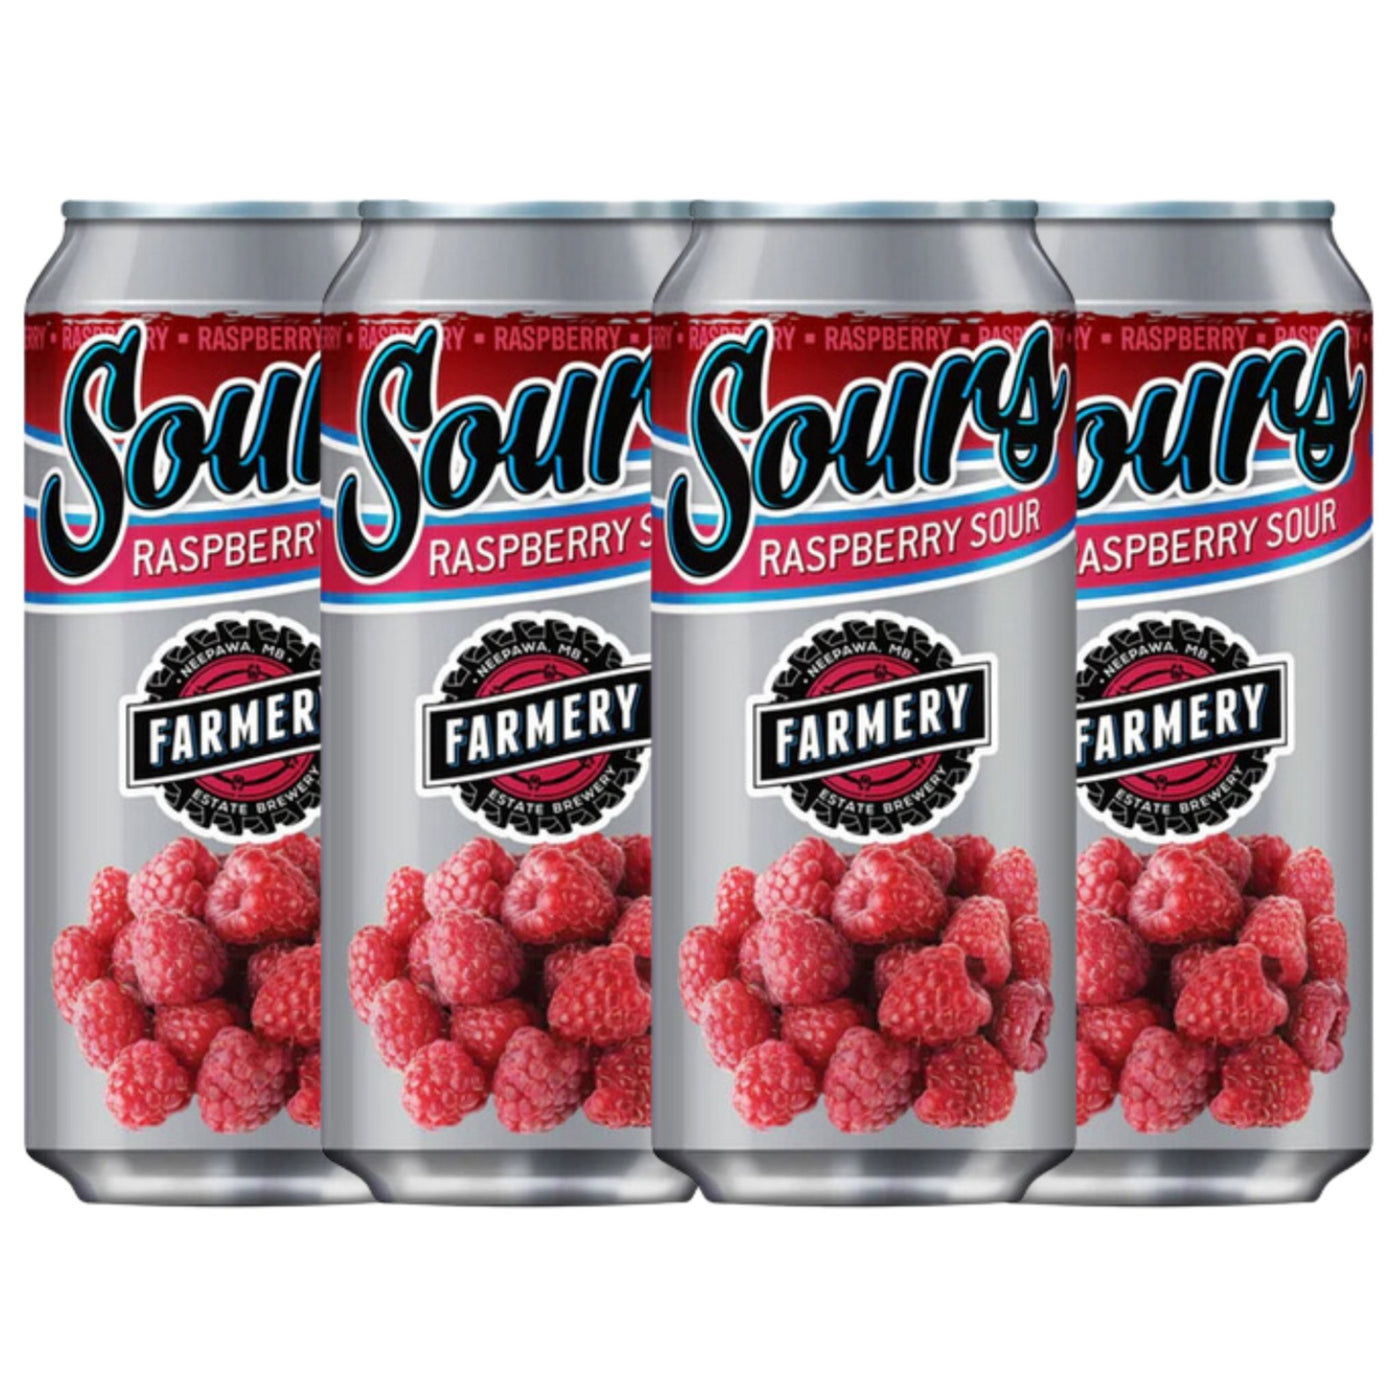 Raspberry Sour - Farmery Estate Brewing Company Inc.-Sours